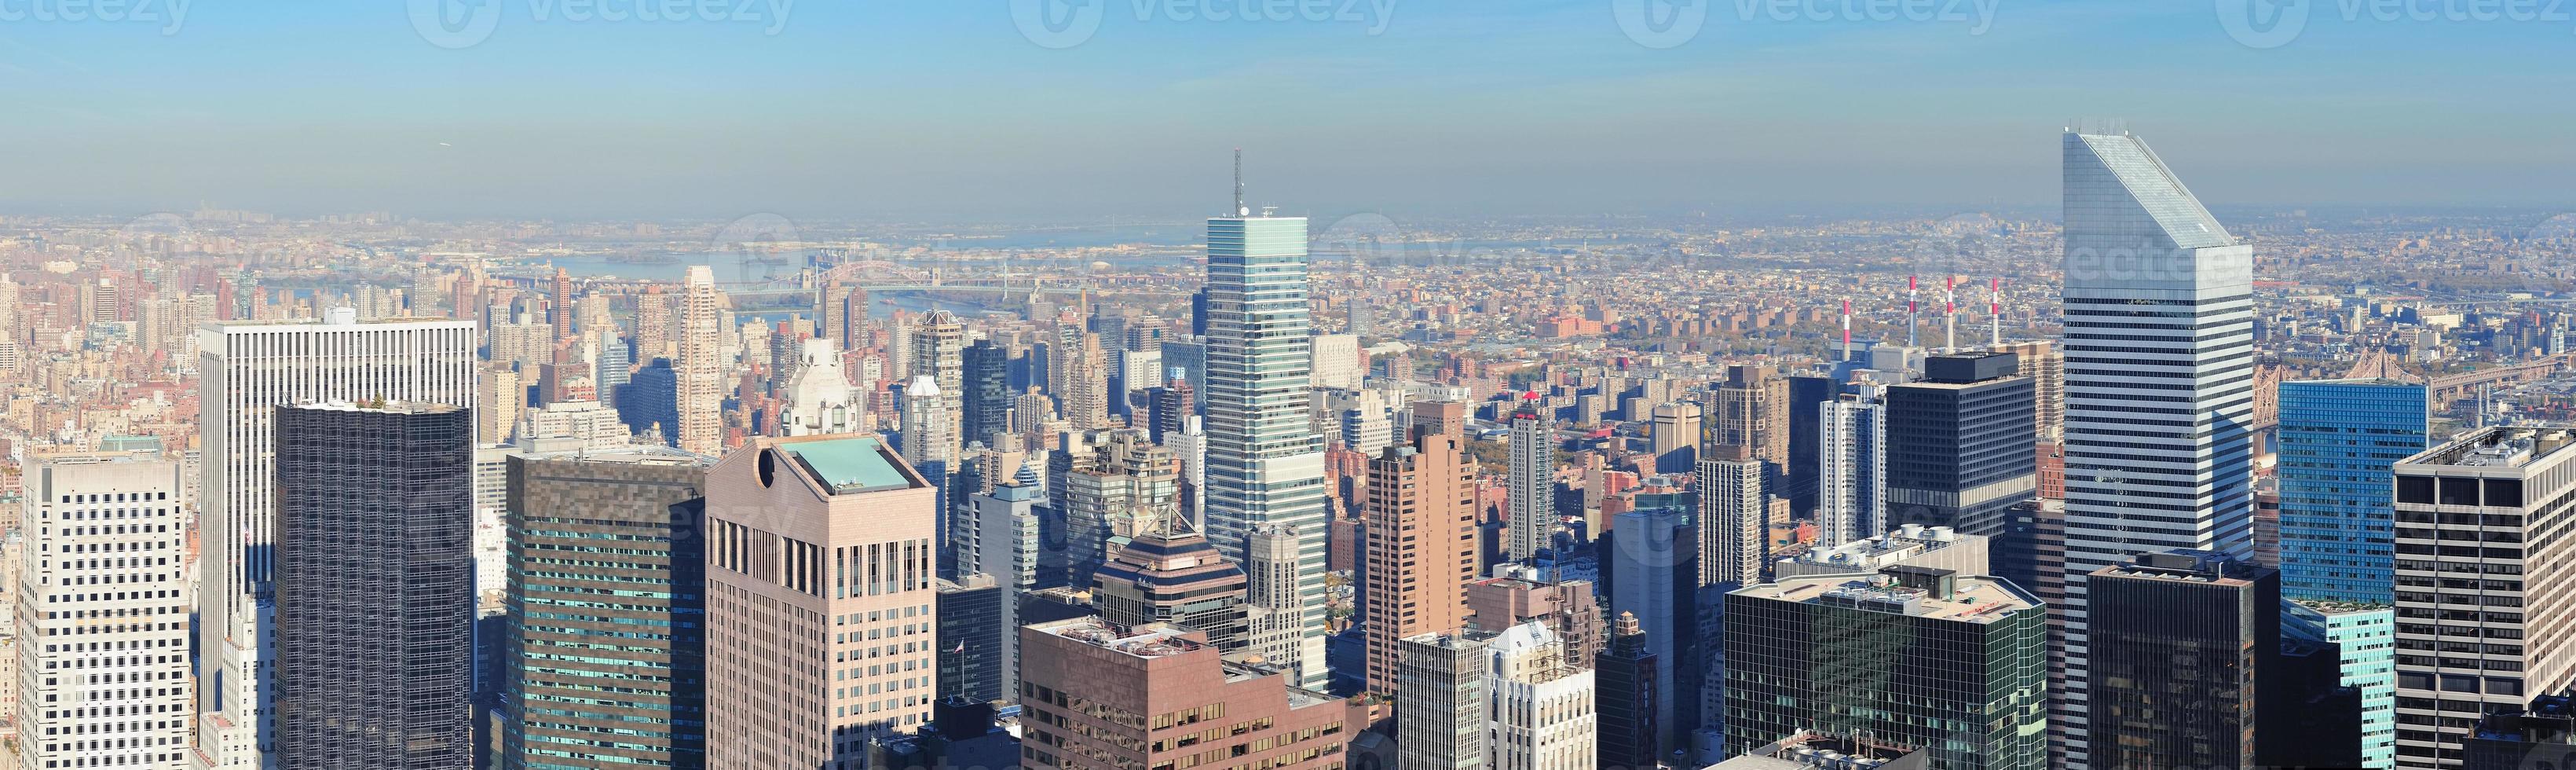 New York City wolkenkrabbers foto